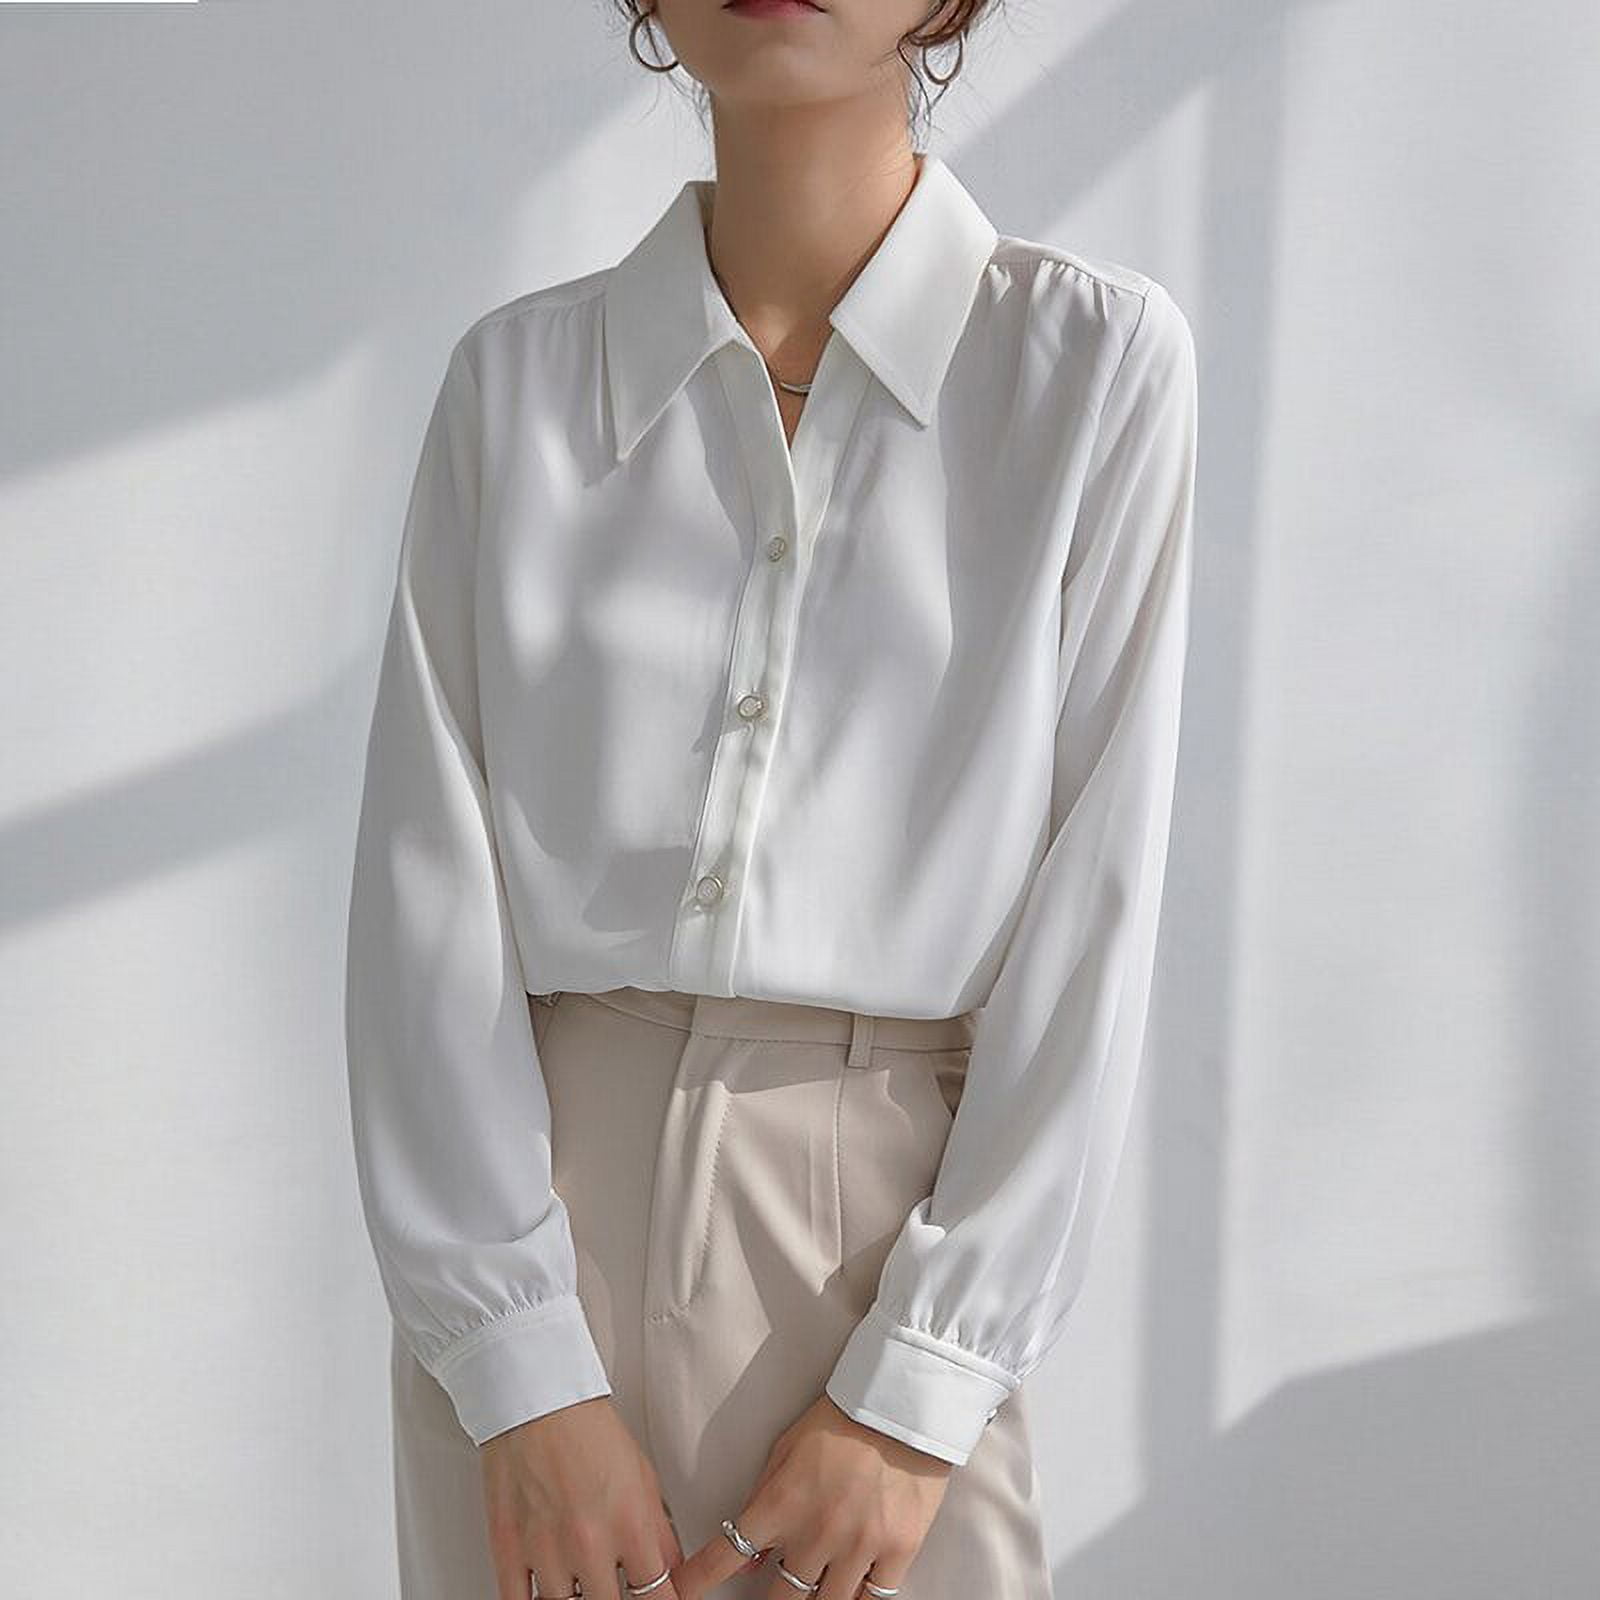 DanceeMangoo Minimalist Loose White Shirts for Women Turn-down Collar Solid  Female Shirts Tops Autumn Winter Blouses 